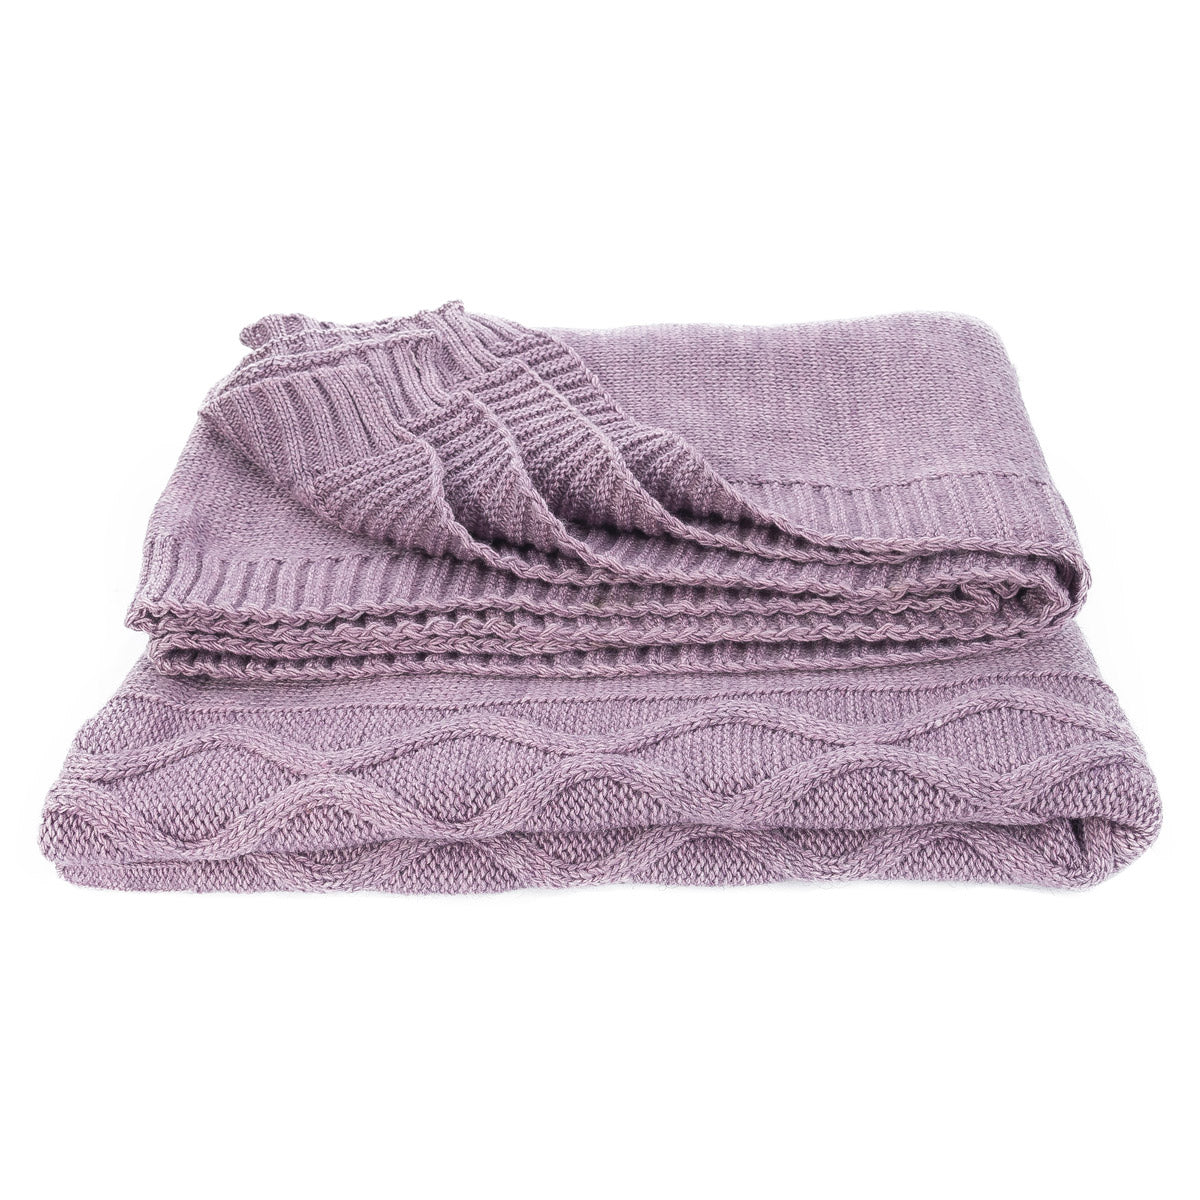 Purple Throw Blanket, Carmel